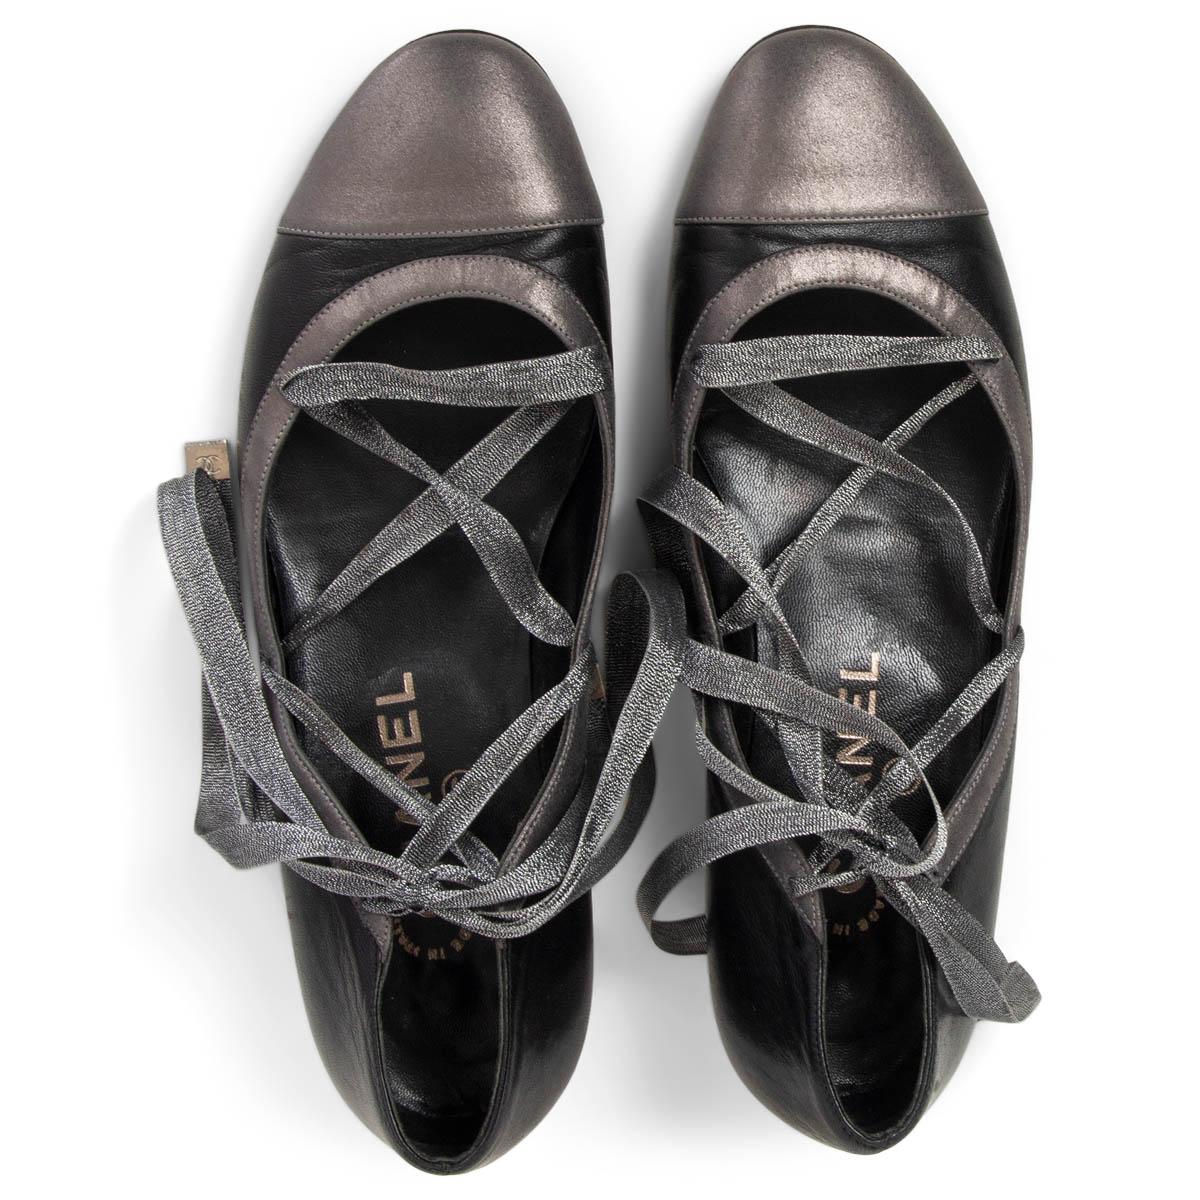 Women's CHANEL black & grey leather LACE UP BALLET Pumps Shoes 37